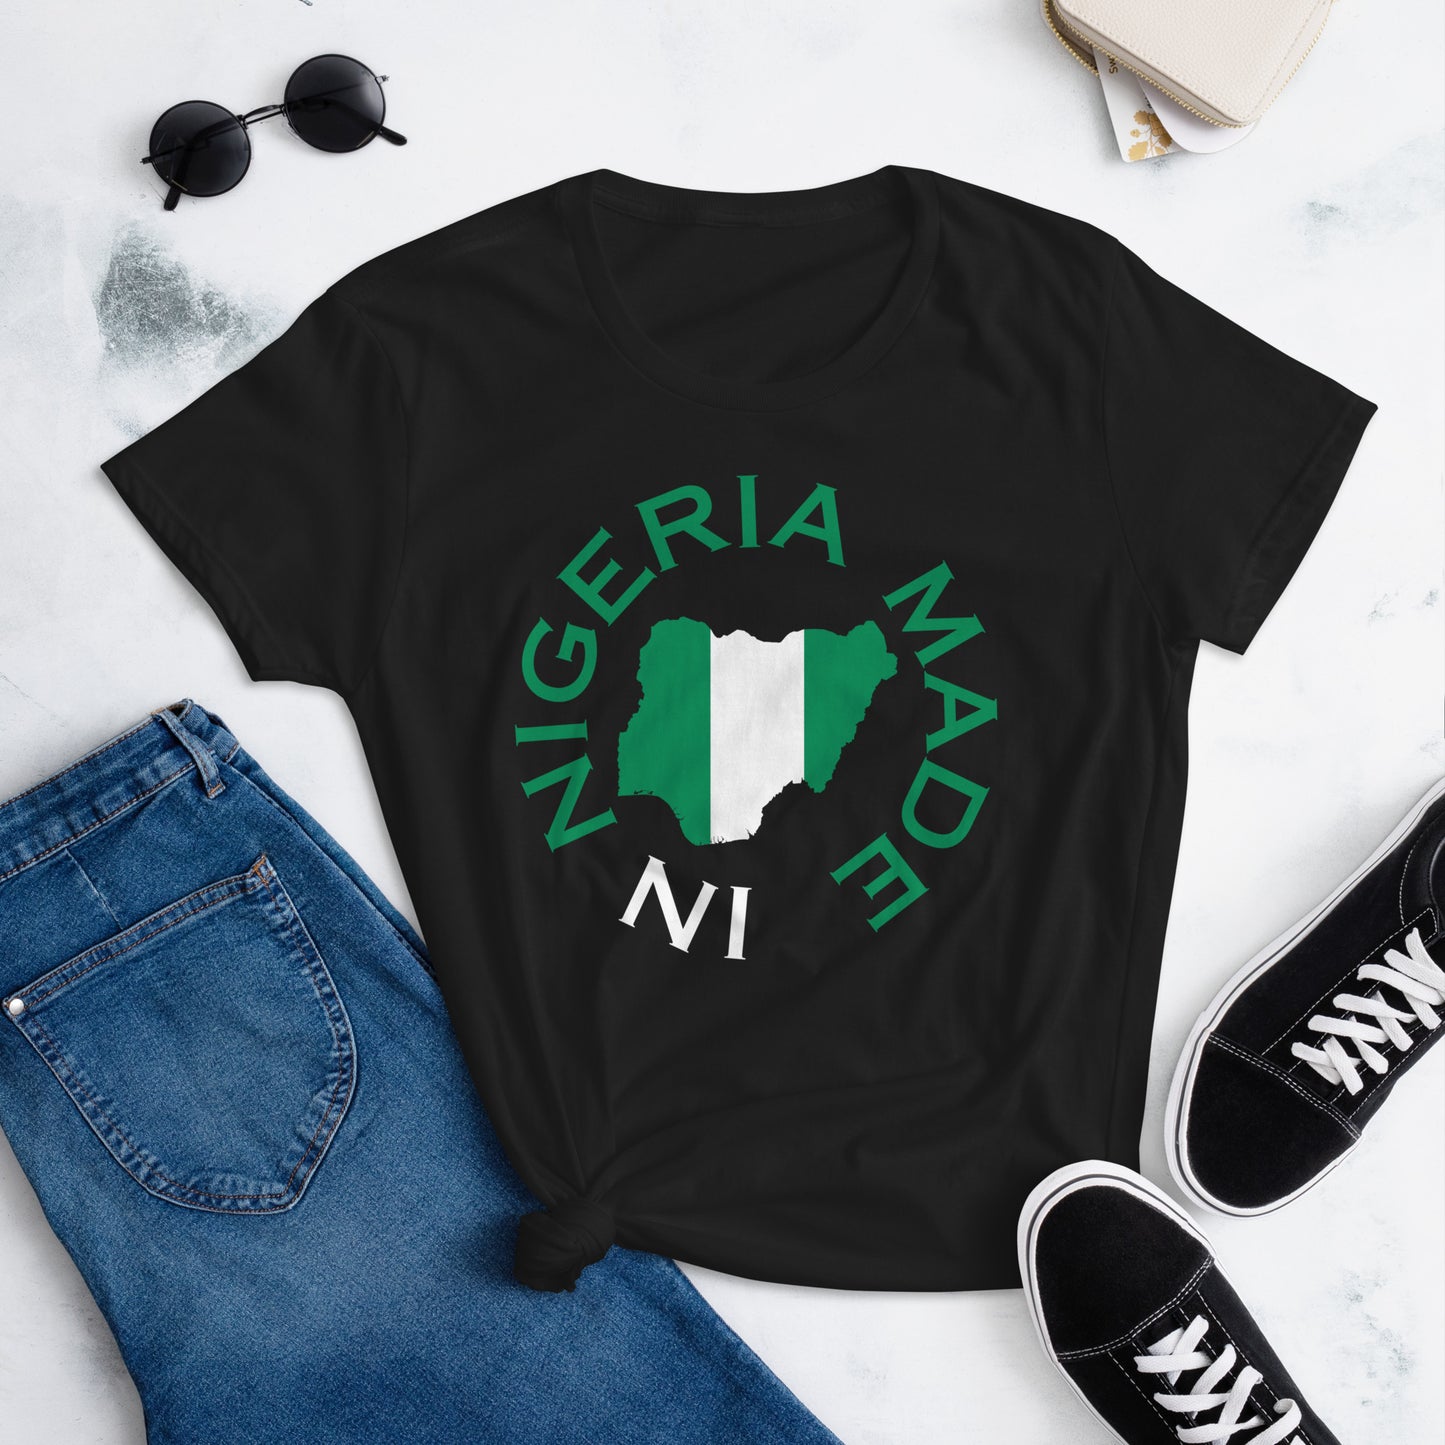 Made in Nigeria Women's T-shirt